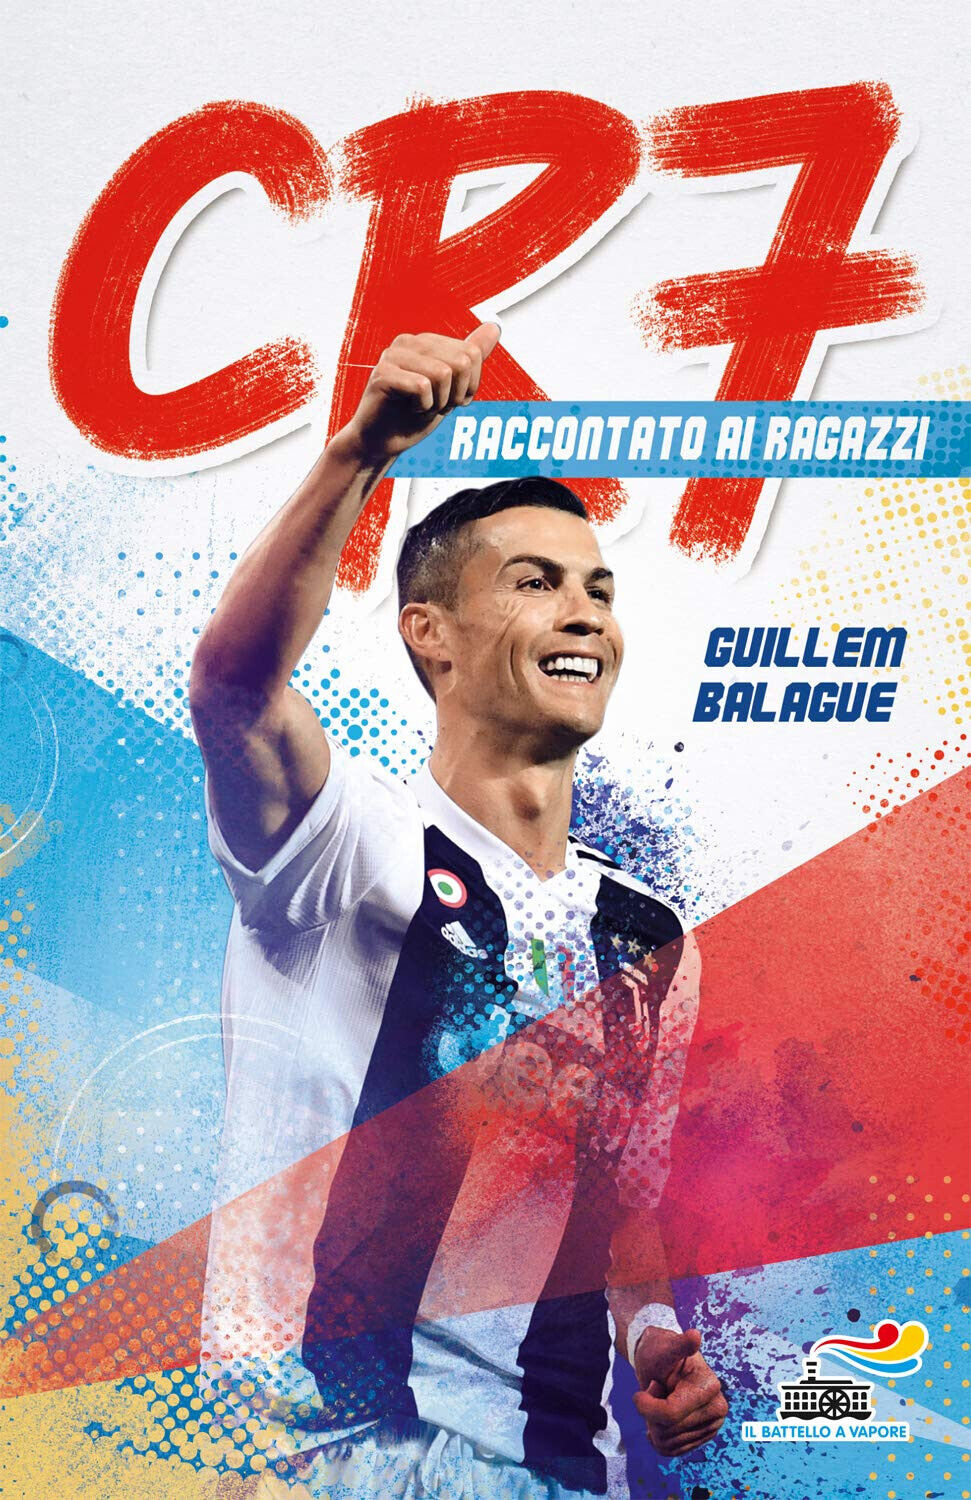 CR7. Cristiano Ronaldo raccontato ai ragazzi - Guillem Balague - Piemme, 2019